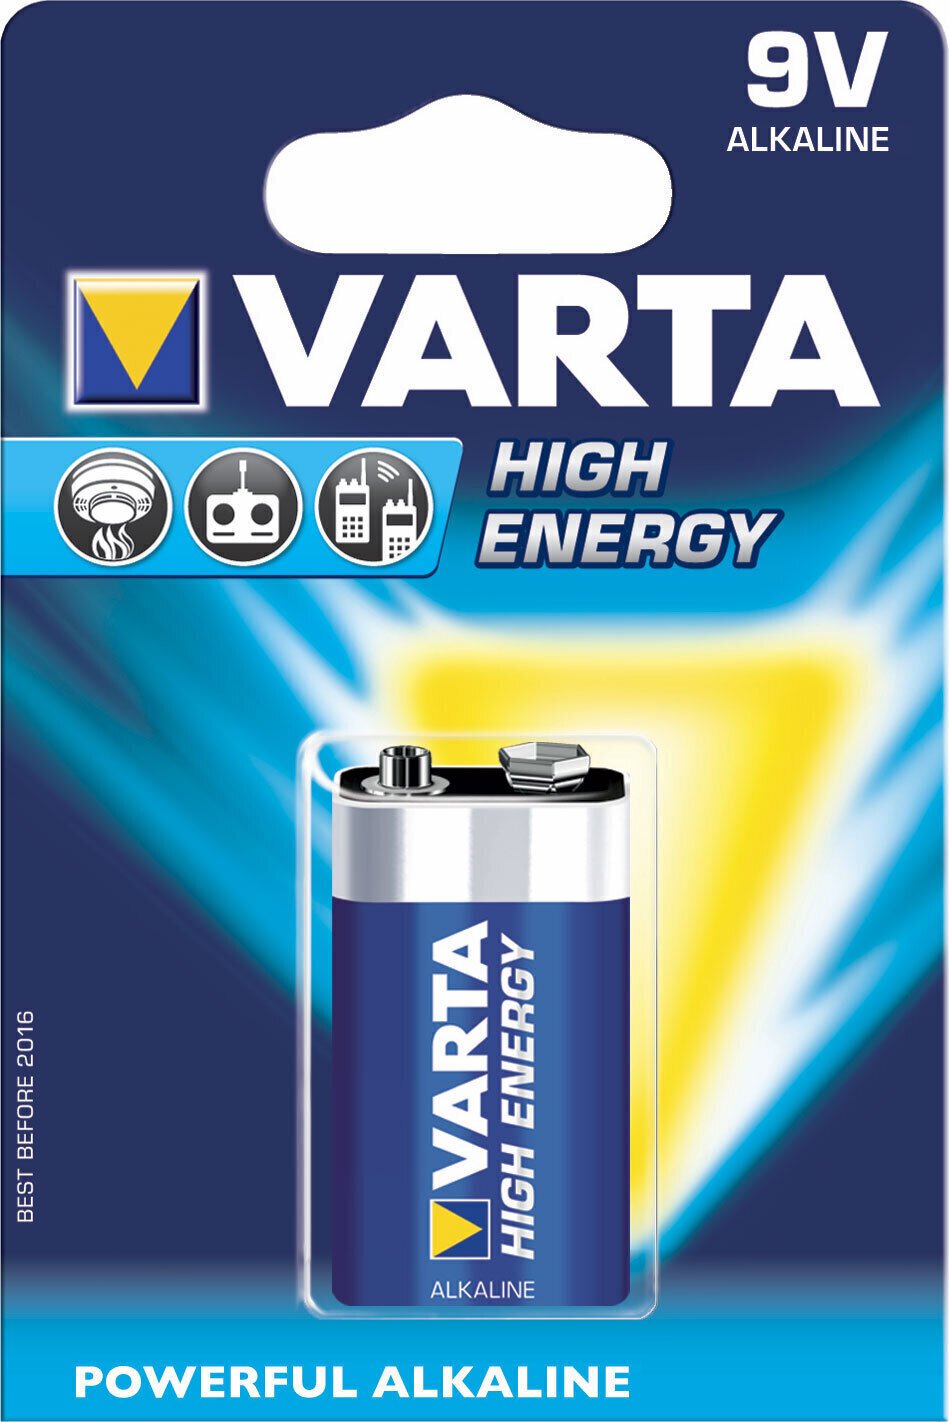 9V Baterry Varta 9V Baterry 6F22 High Energy